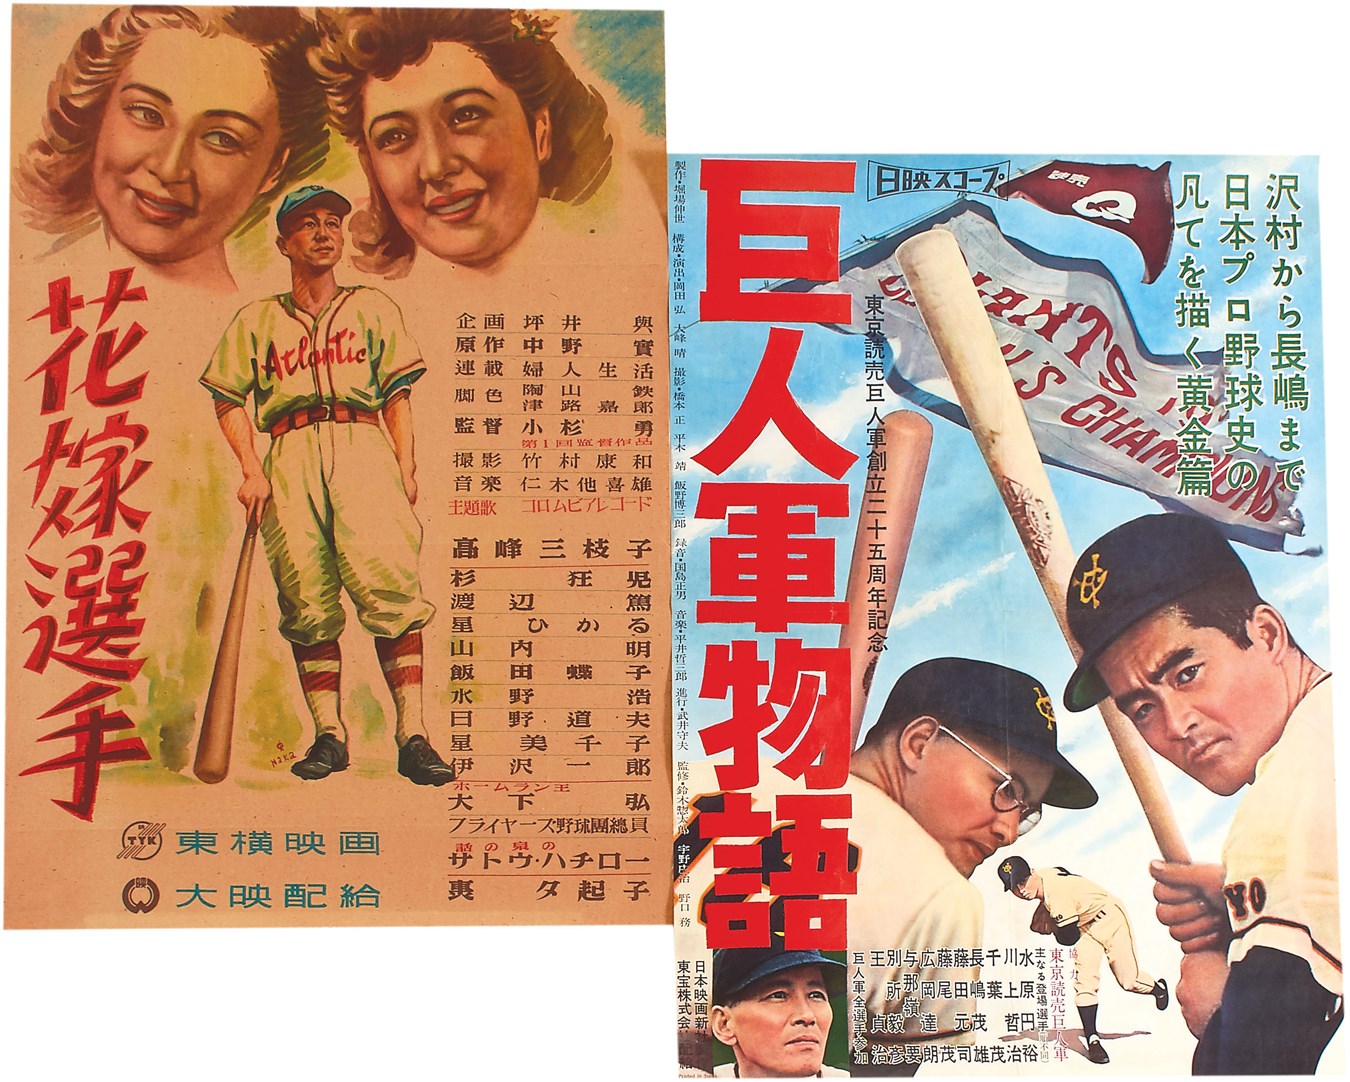 Negro League, Latin, Japanese & Int'l Baseball - Two 1940s-50s Japanese Baseball Movie Posters w/"The Yomiuri Giants Story" starring Oh & Nagashima